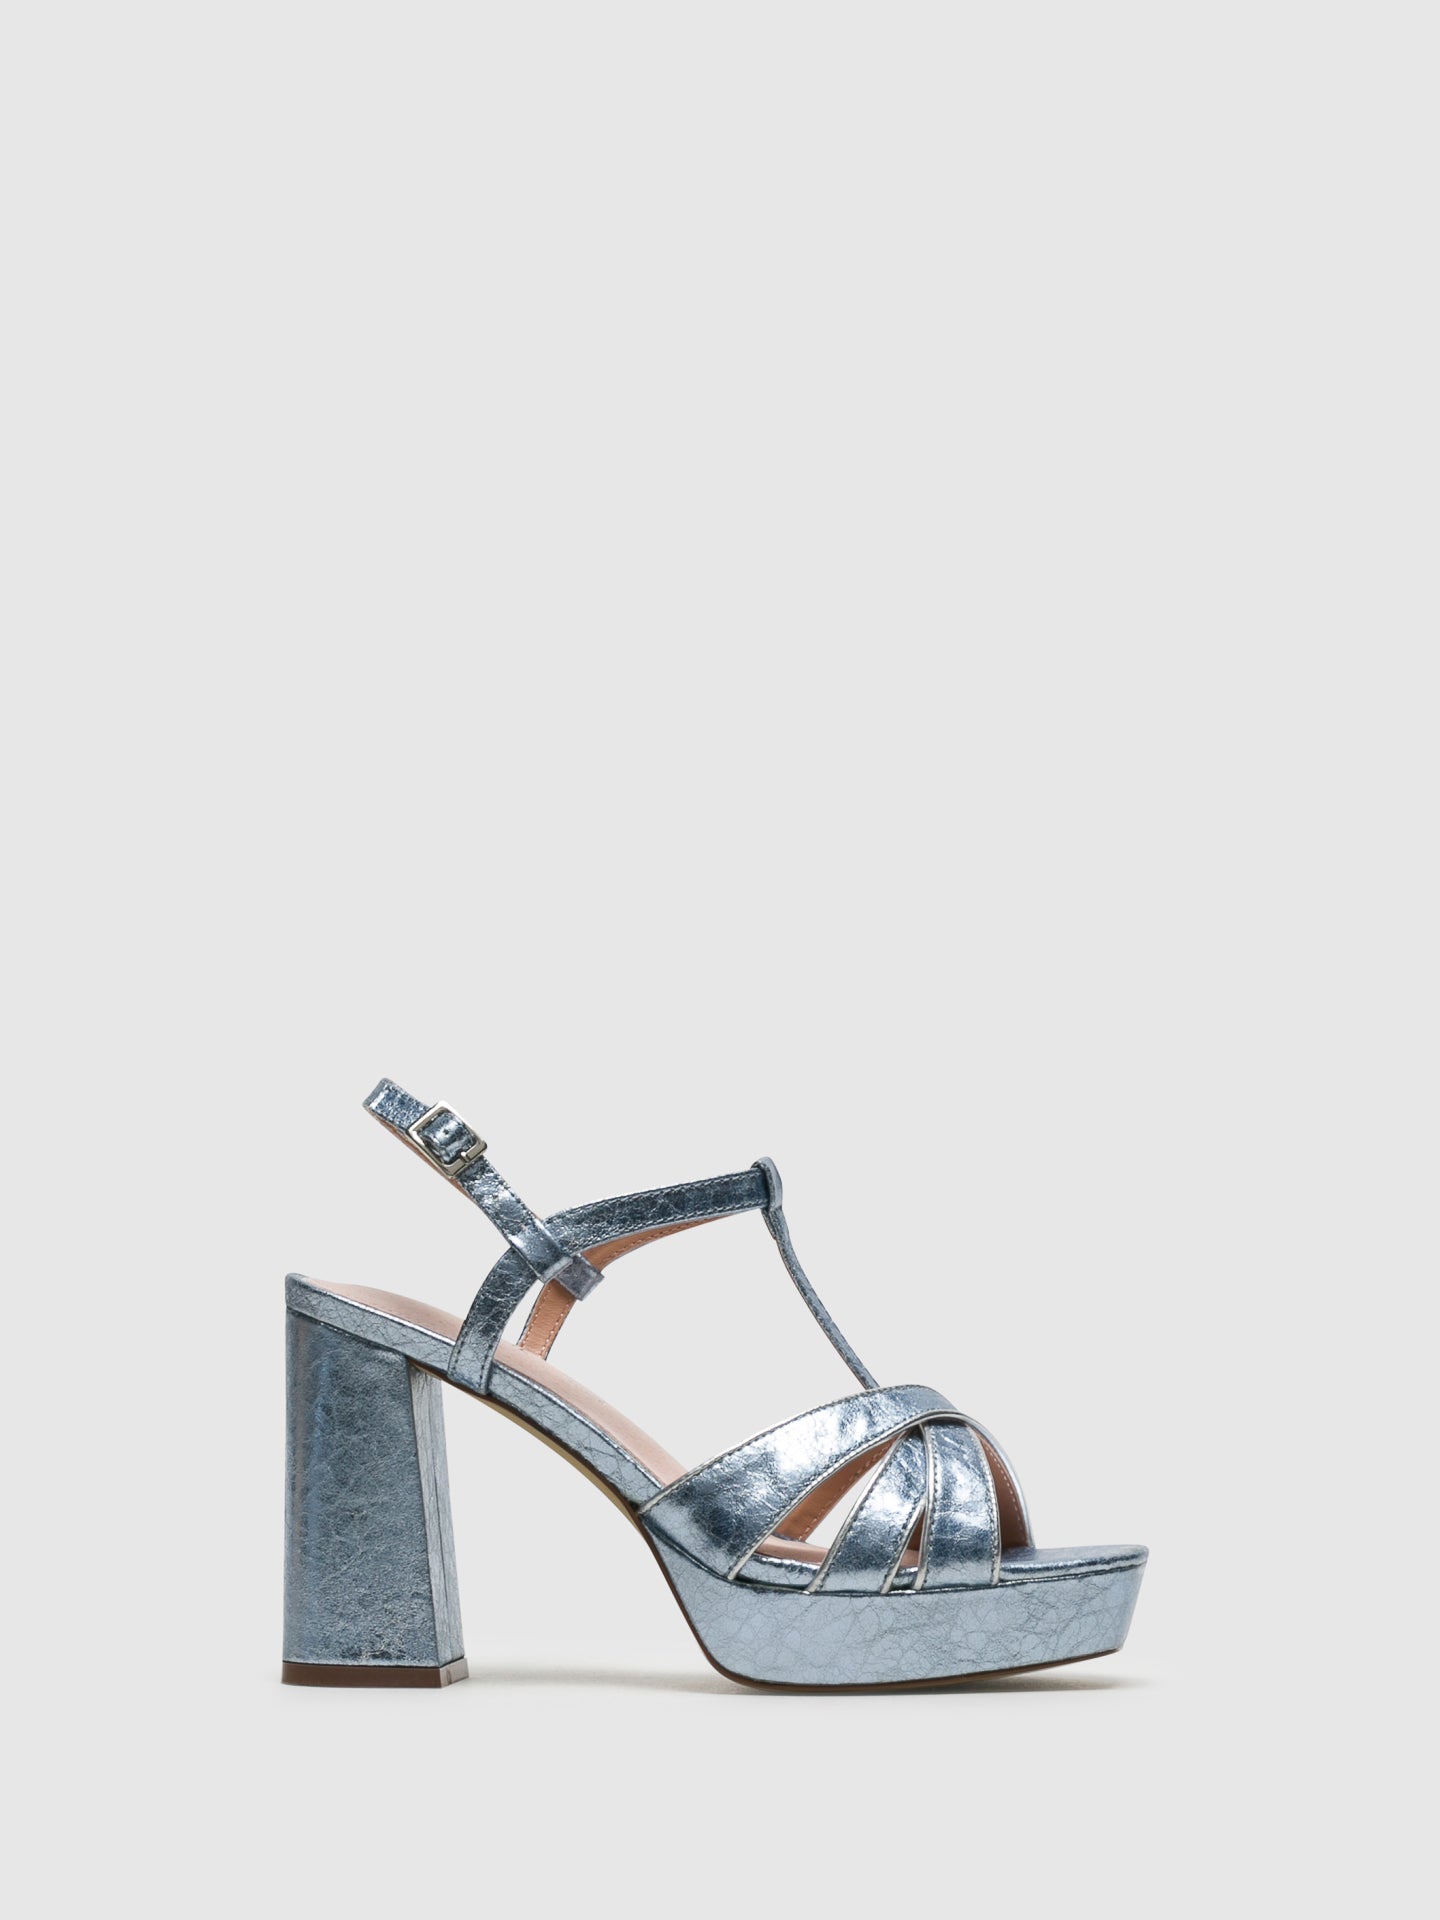 Mariamare Silver Sling-Back Sandals